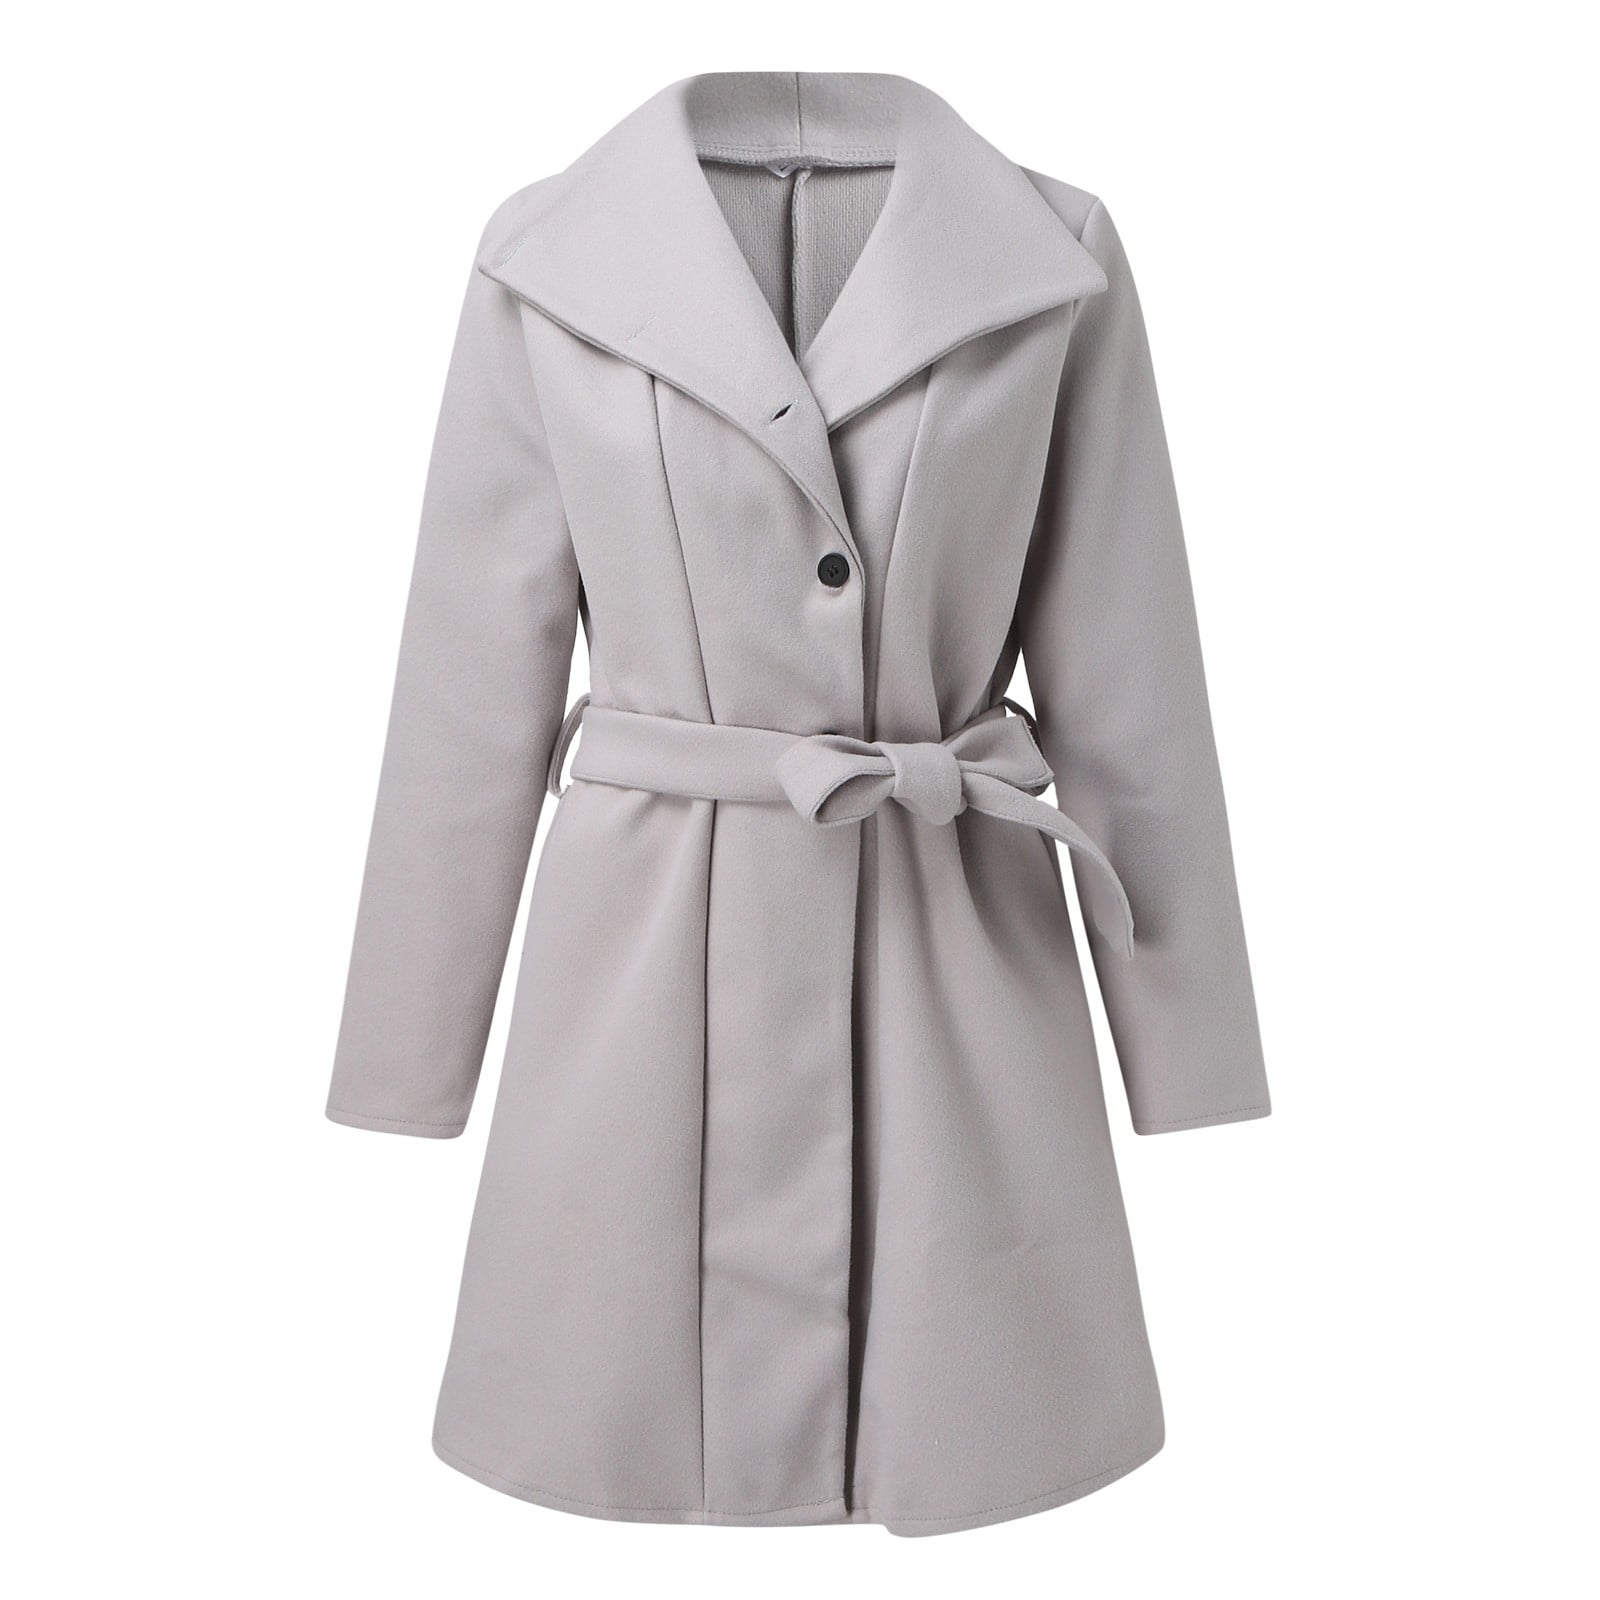 Lisingtool Winter Coats for Women Ladies Long Sleeved Mid Length Jacket ...